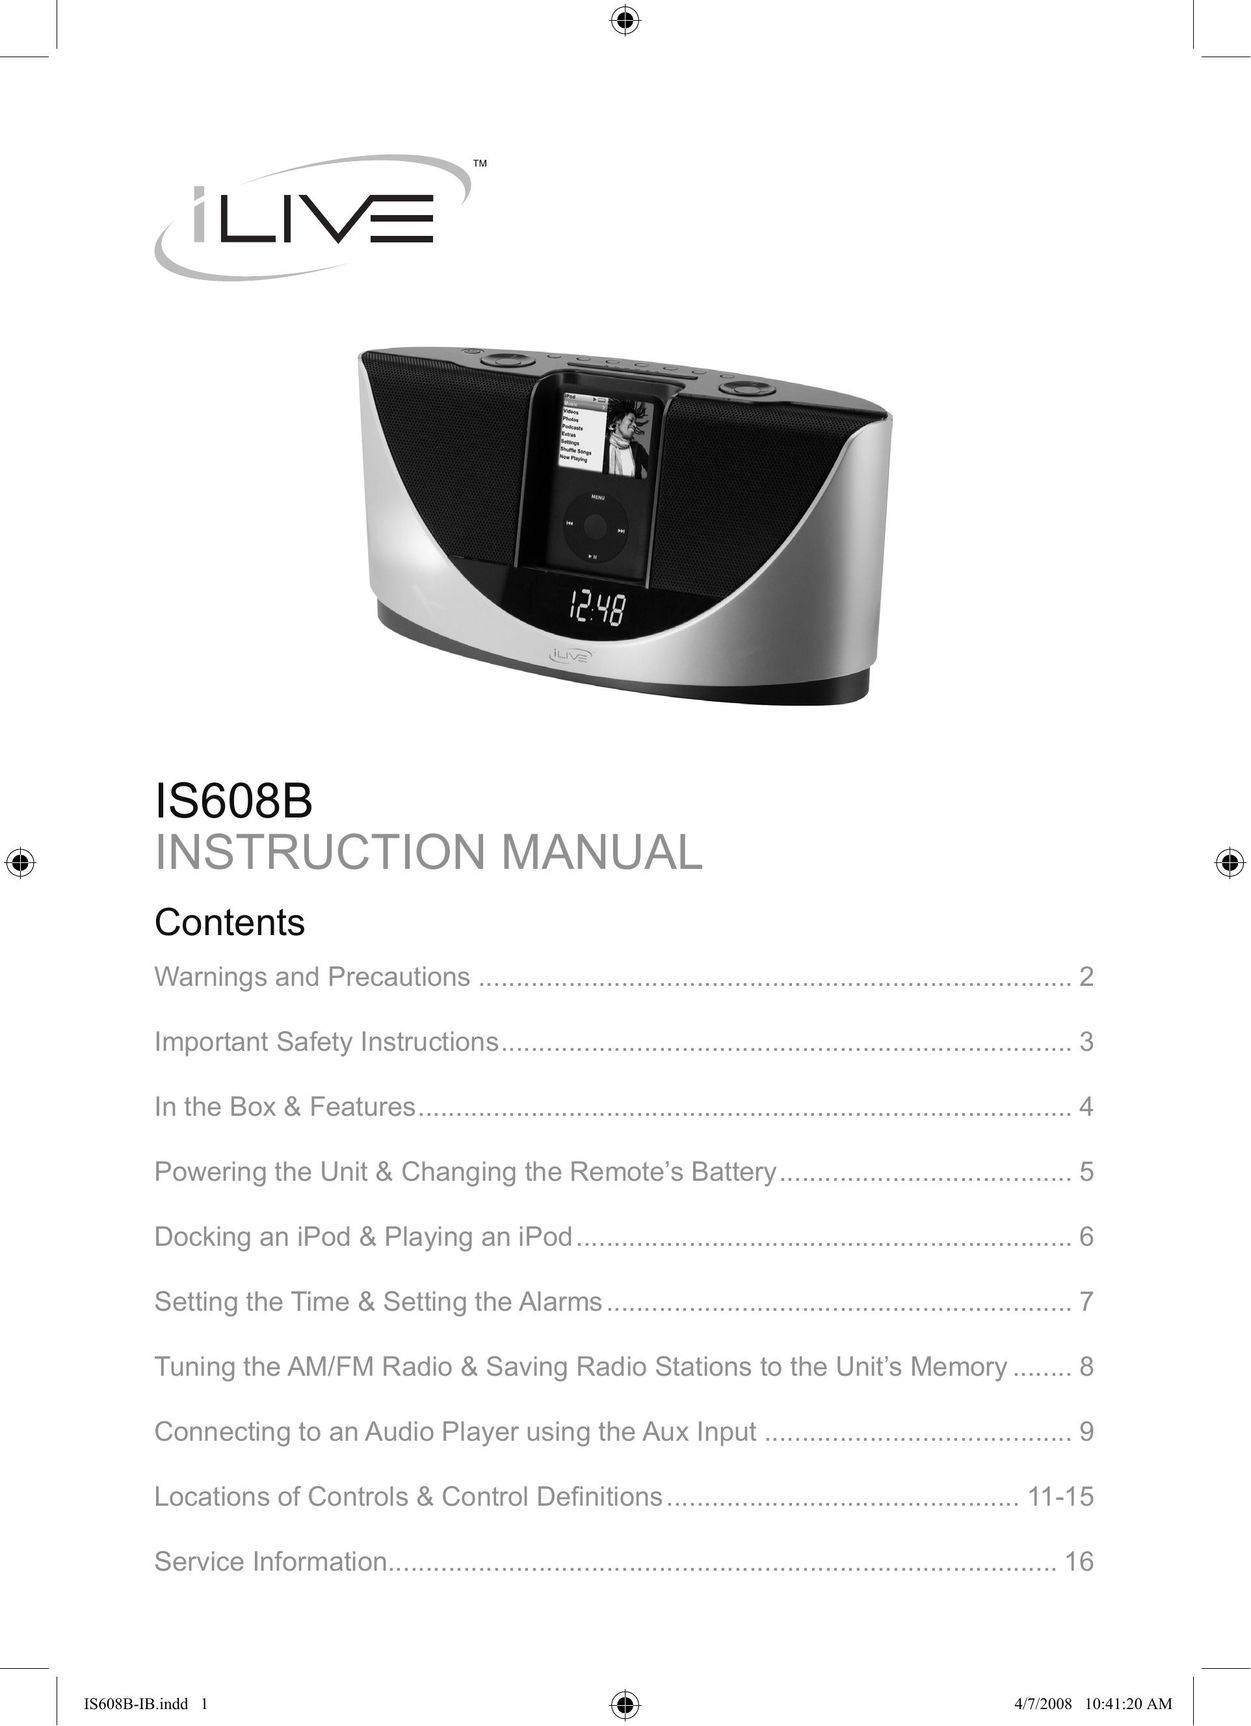 iLive IS608B MP3 Docking Station User Manual